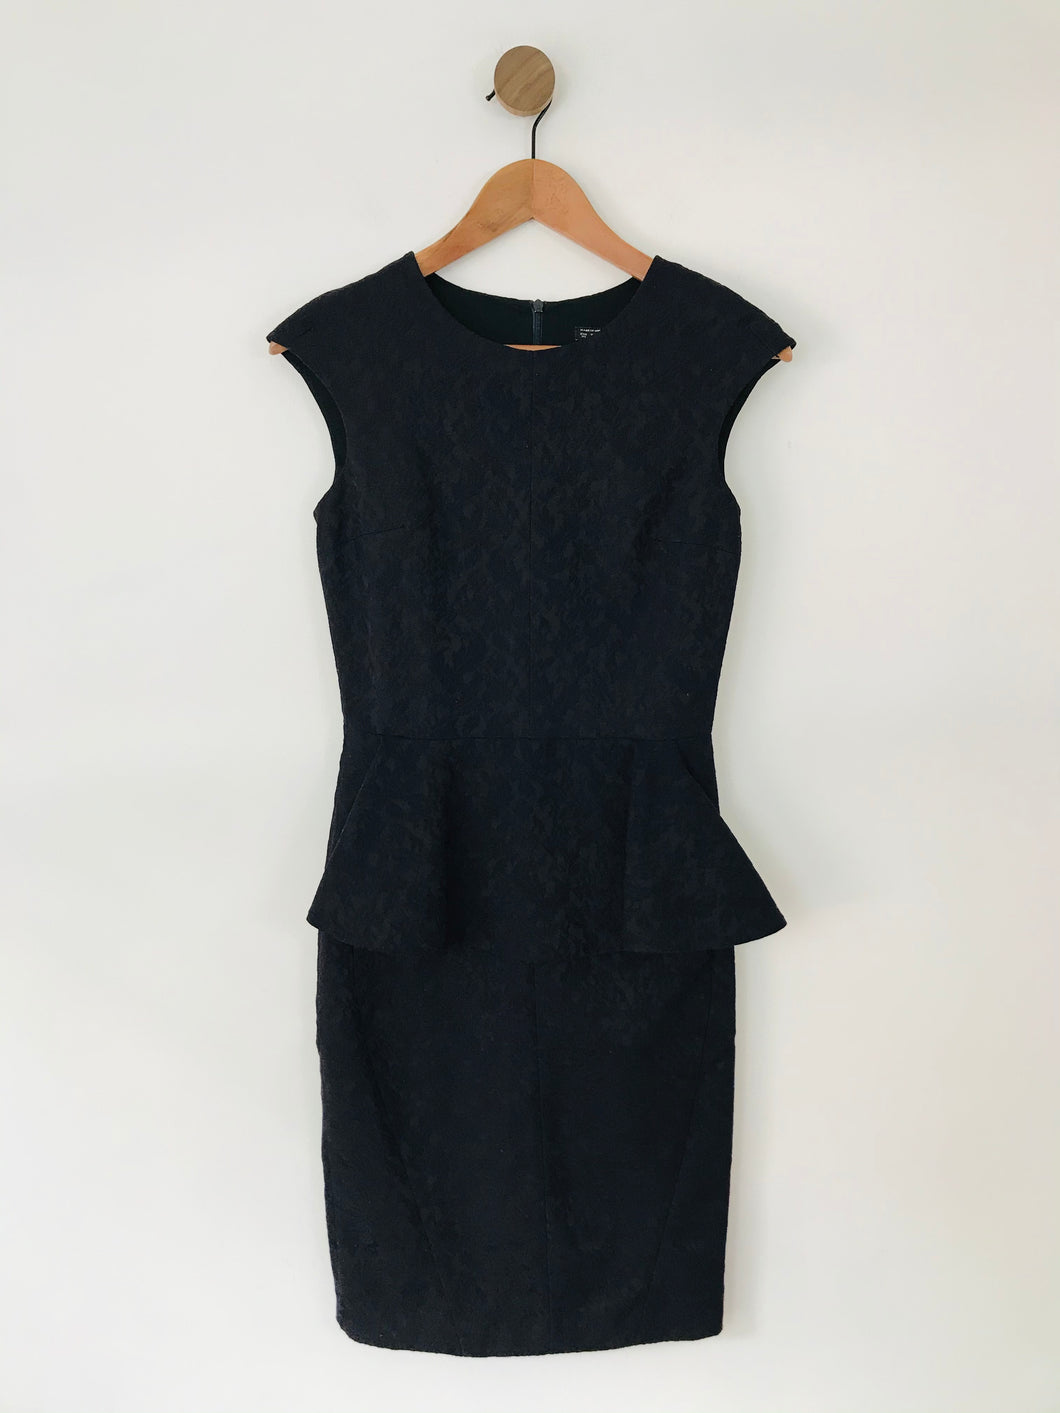 Zara Women's Ruffle peplum Sheath Dress | XS UK6-8 | Black